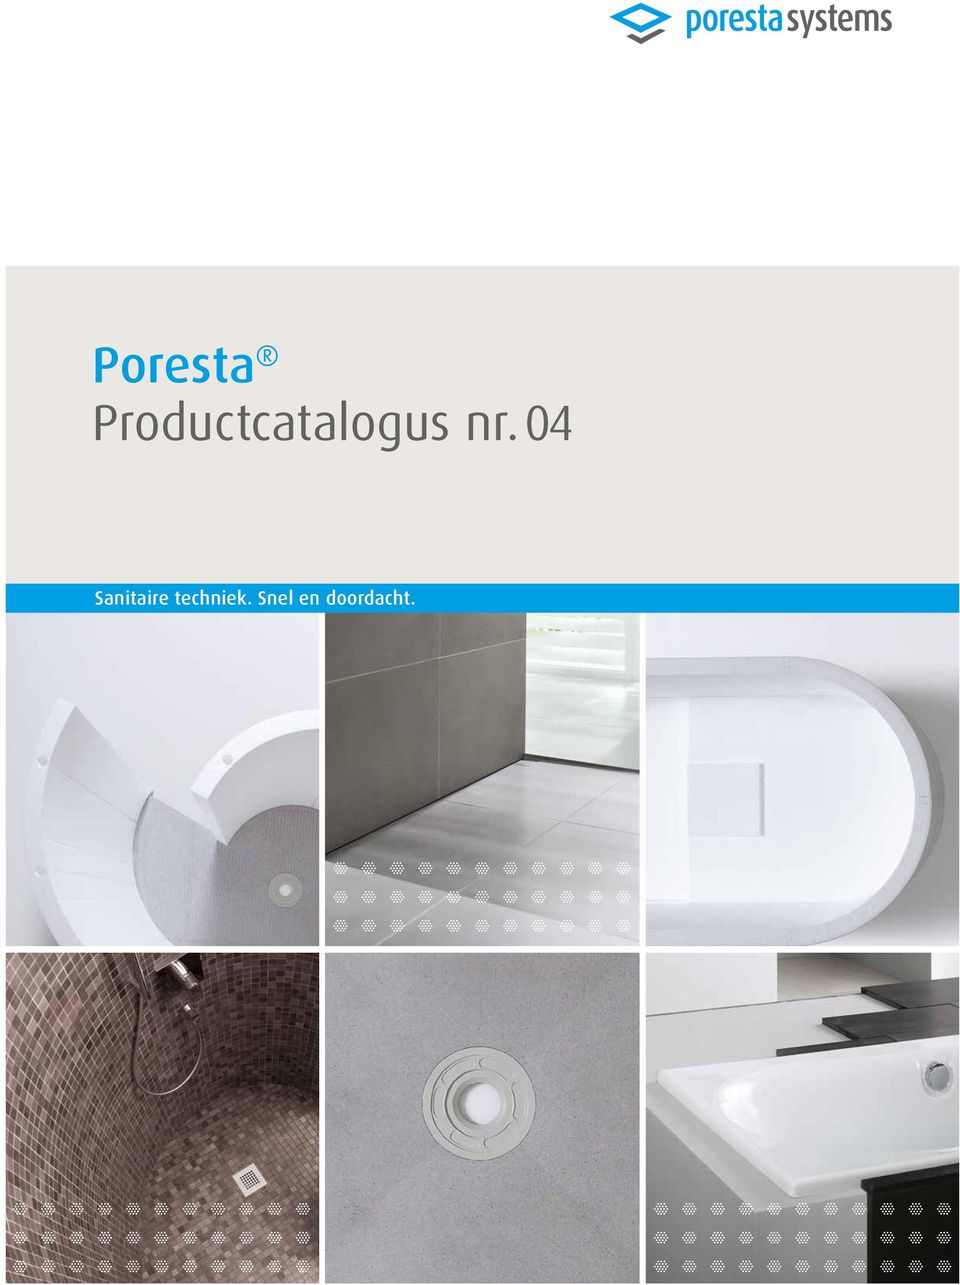 Duitsland poresta systems GmbH T +49 (0)5621. 801-0 F +49 ( 0)5621. 801-297 info-de@poresta.